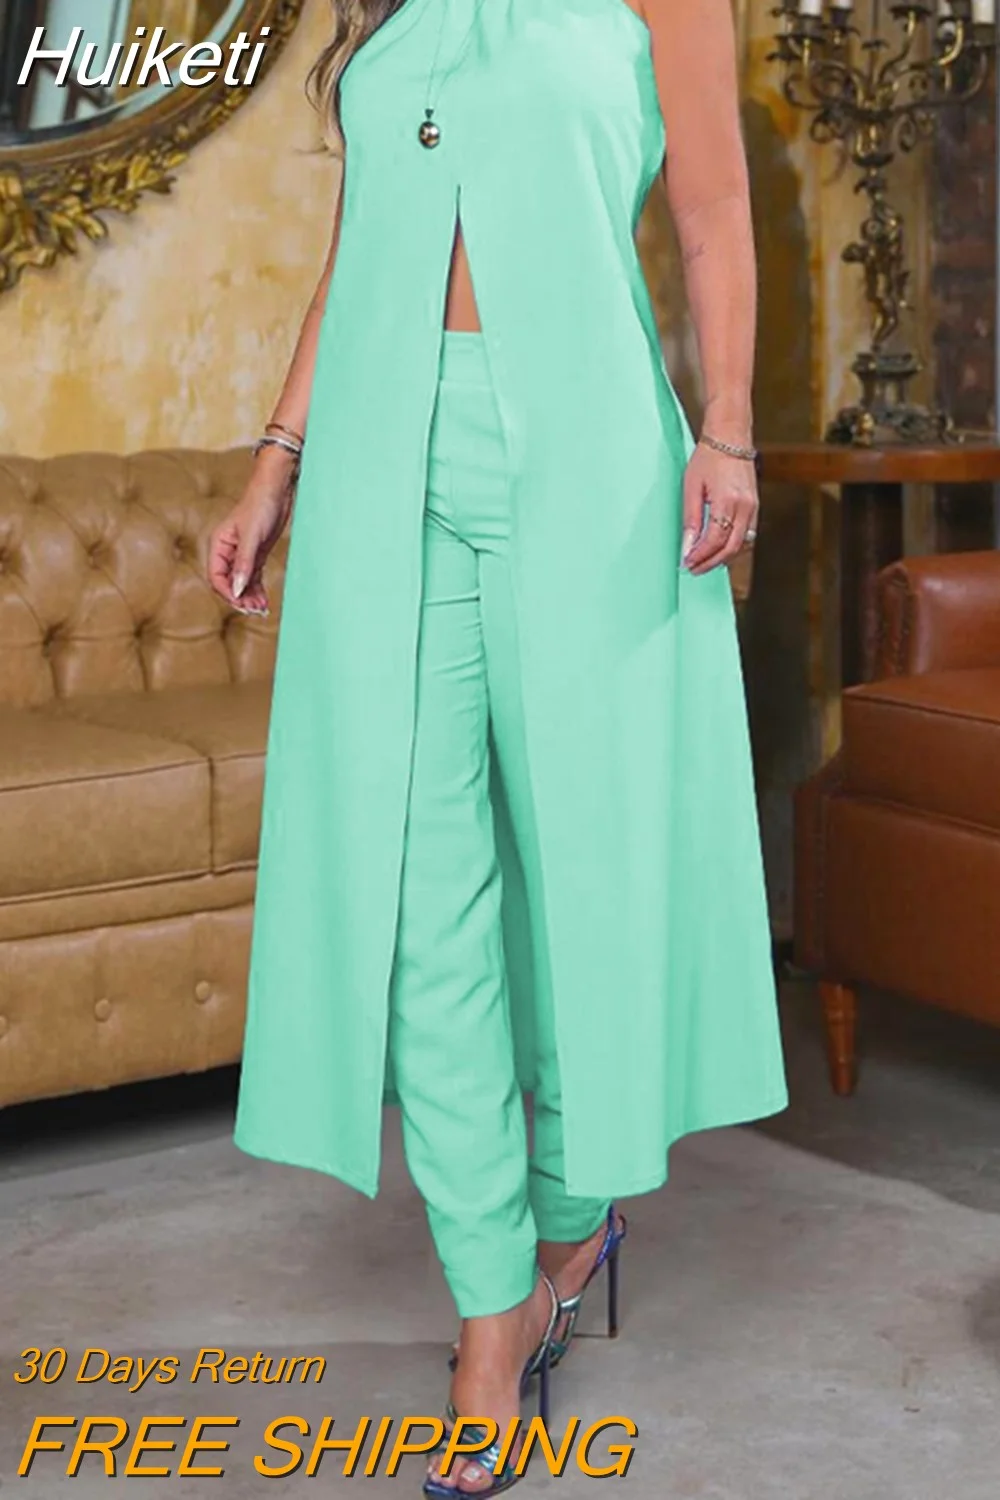 Huiketi Women Fashion Sleeveless Two Piece Suit Sets Office Lady Work Wear Solid Halter High Slit Longline Top Pants Set